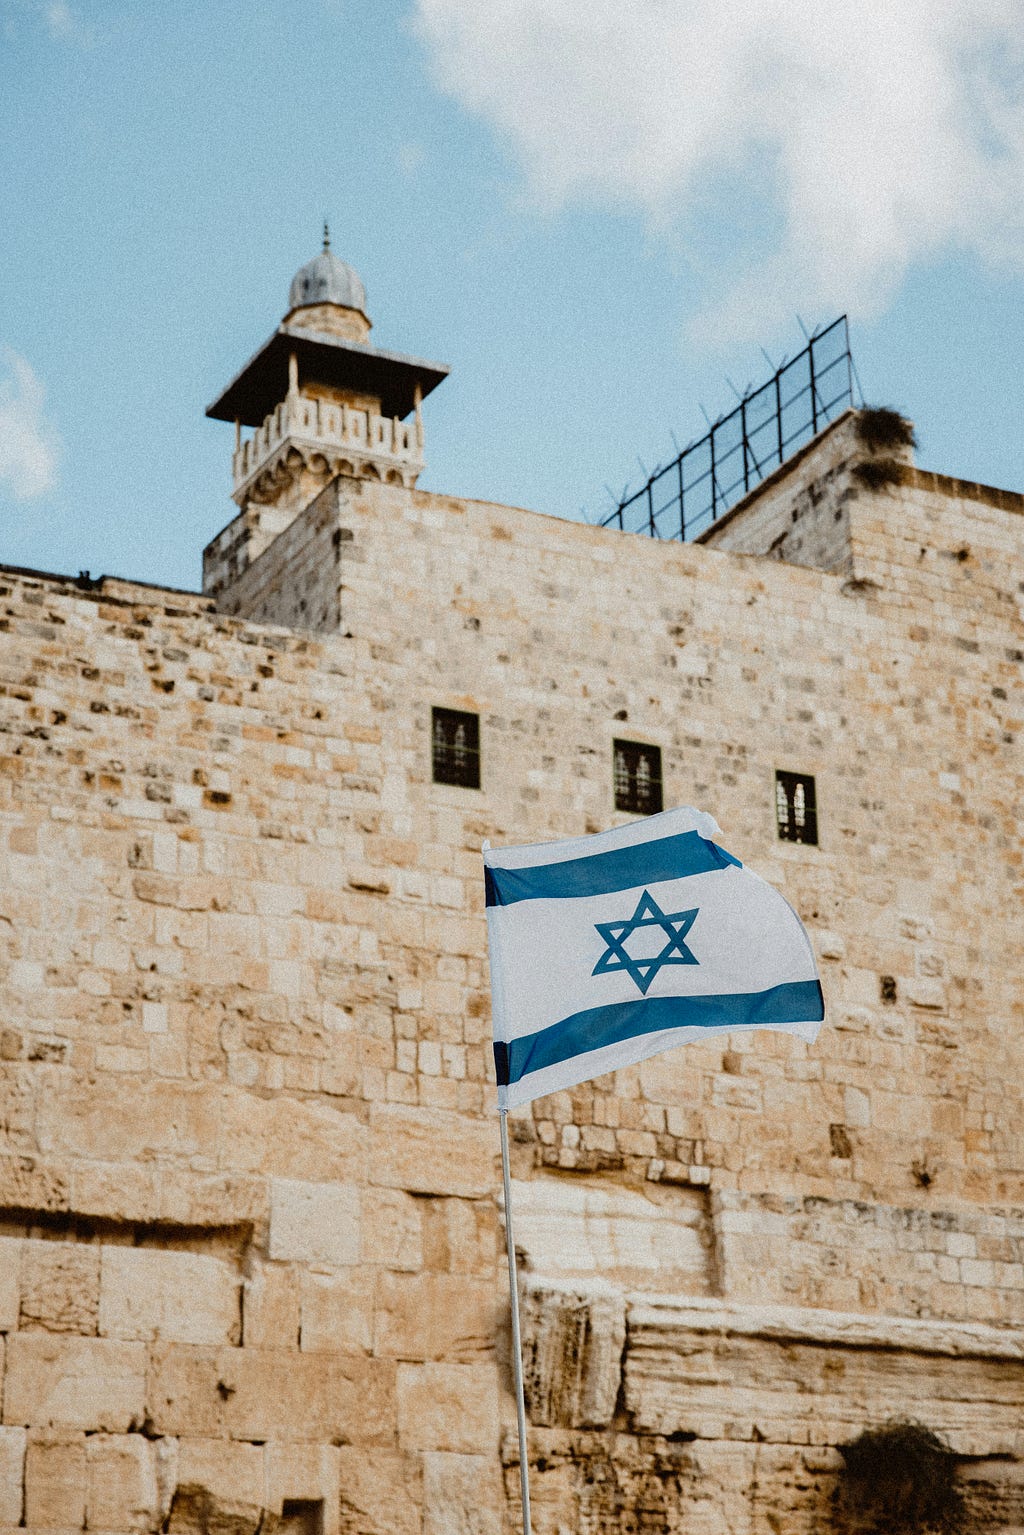 The flag of Israel waving near the city of Jerusalem.